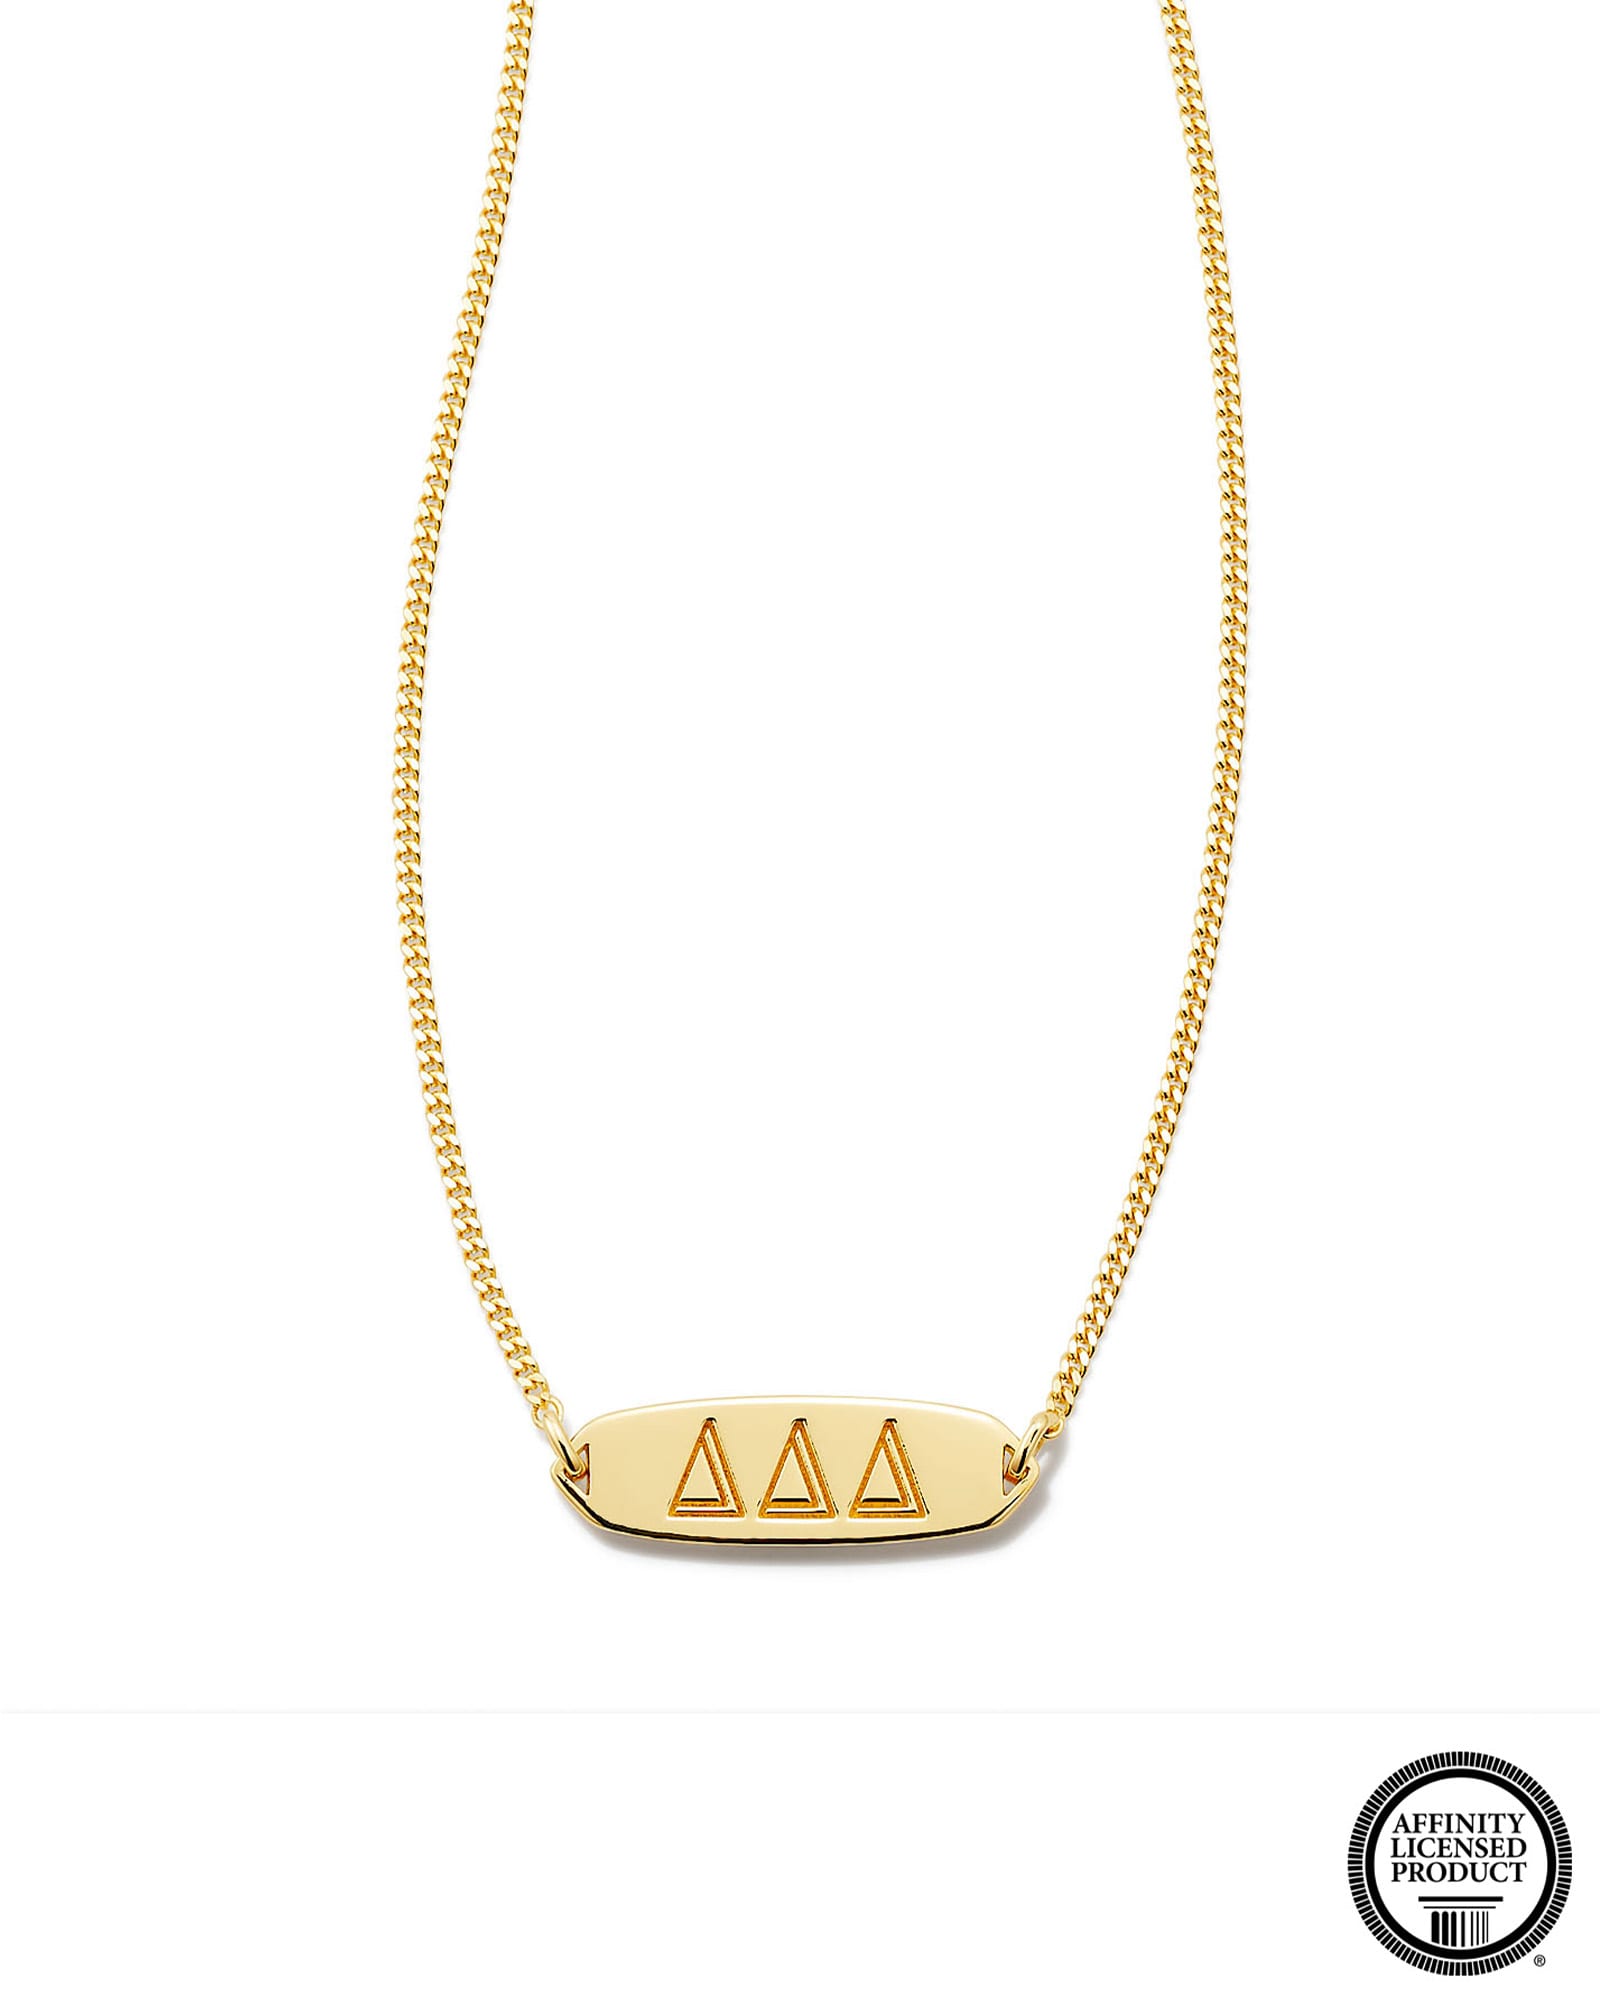 Kendra Scott Delta Delta Delta Pendant Necklace in 18k Gold Vermeil | Sterling Silver